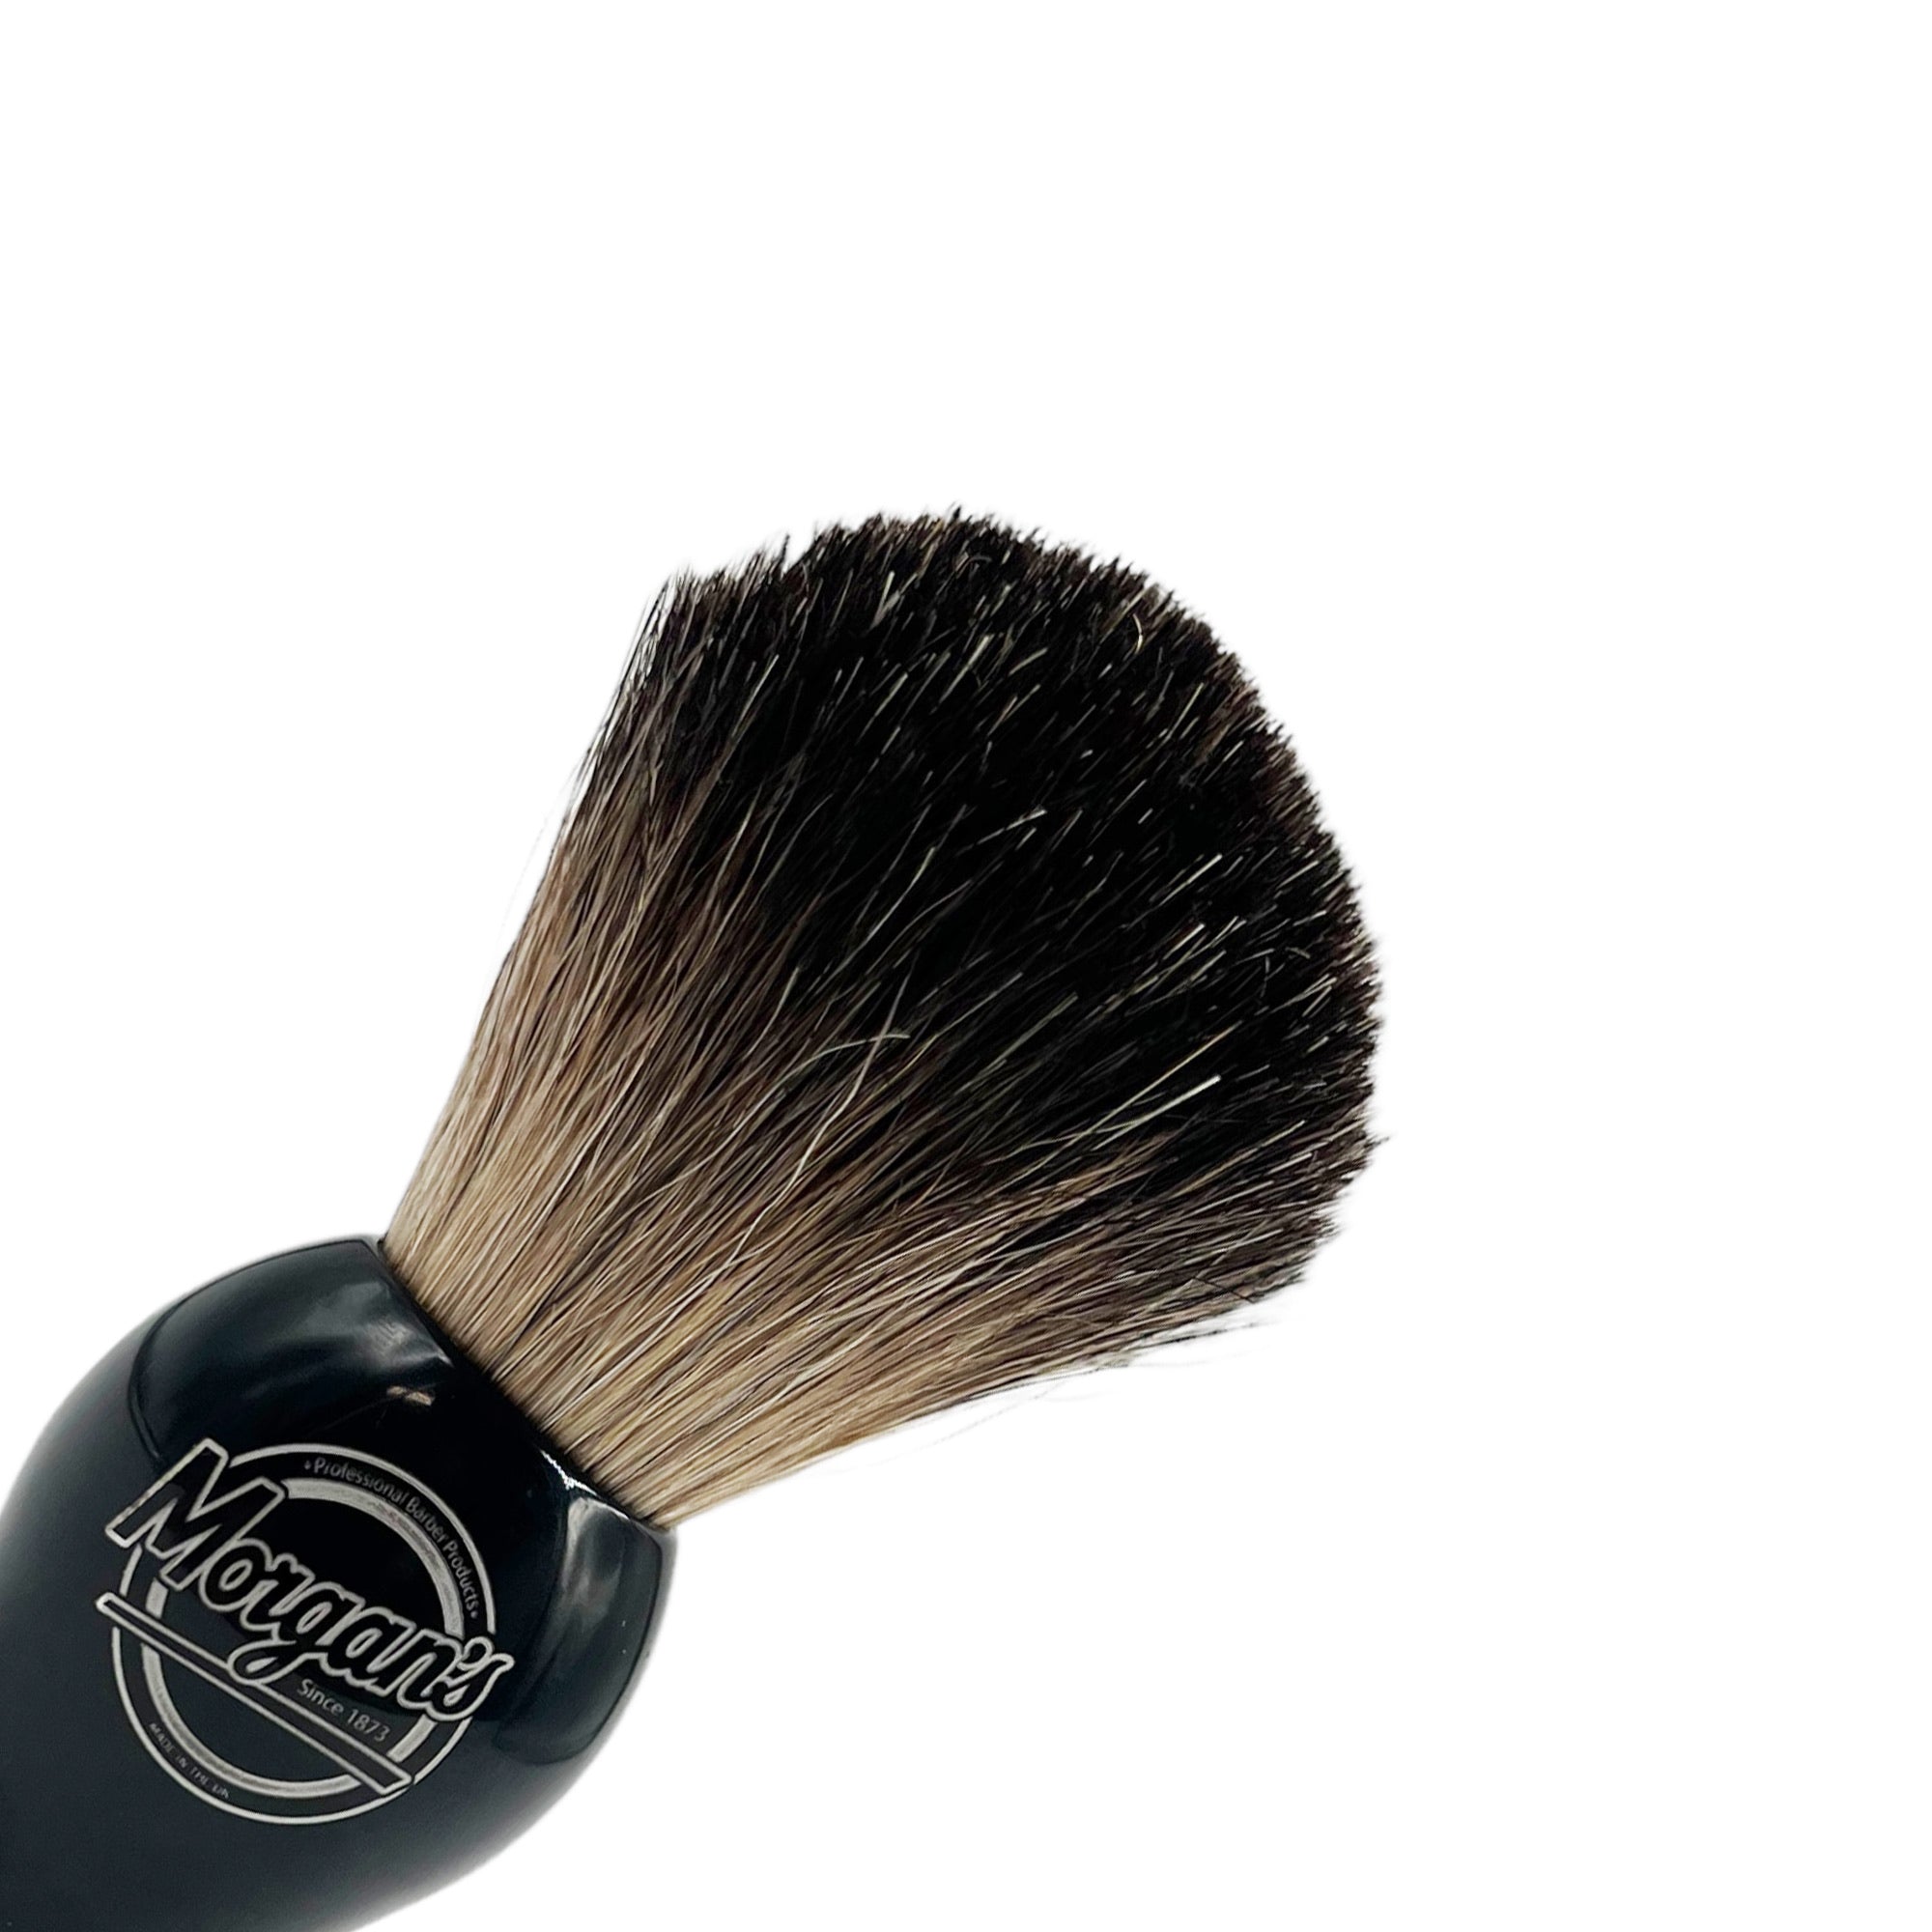 Morgan's - Shaving Brush Badger